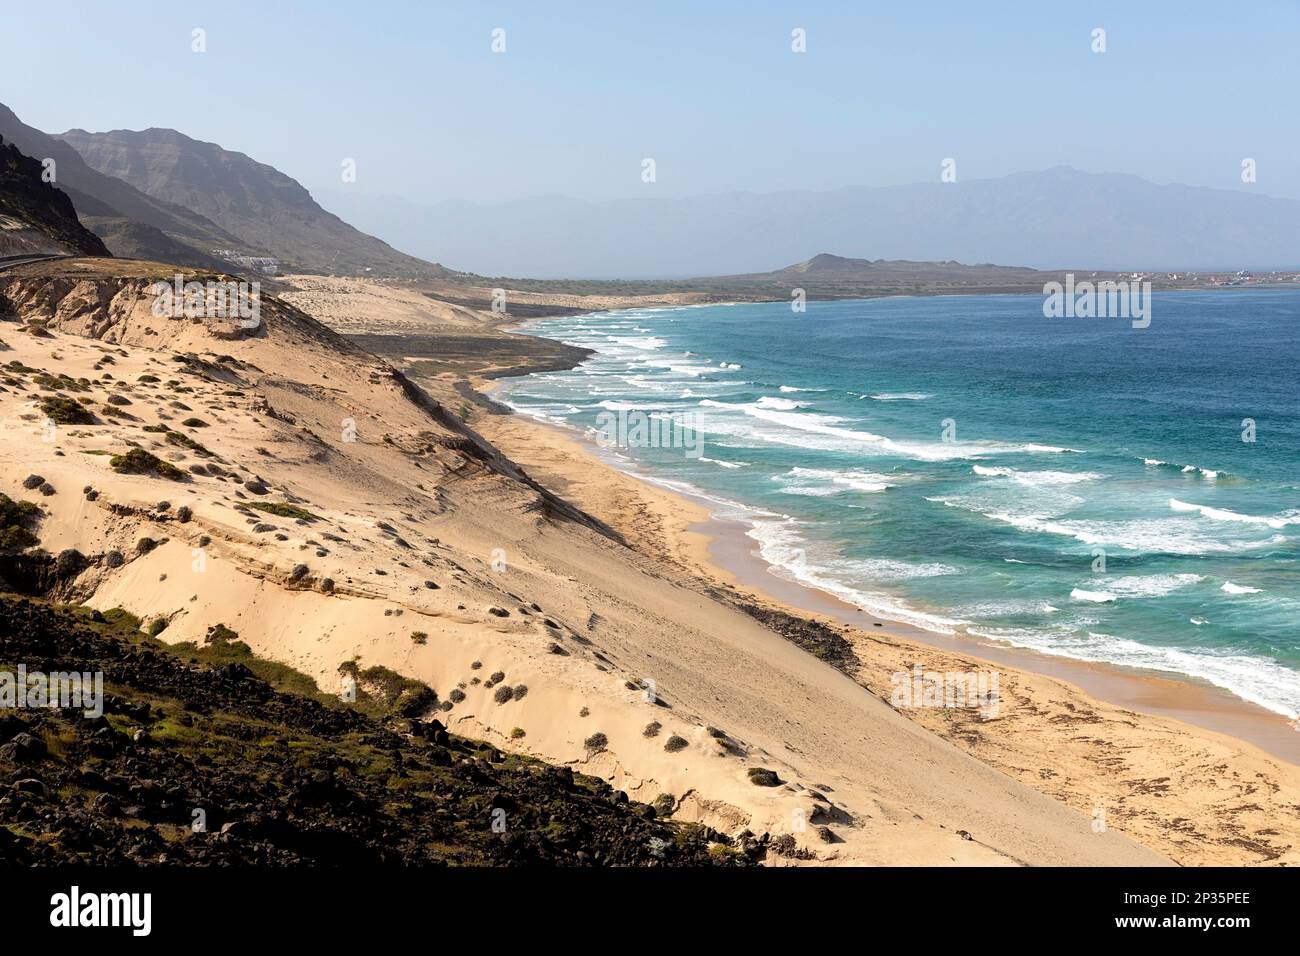 Spectacular coastline from Baia das Gatas to Calhau with sand dunes and views of a long beach and mountains, Sao Vicente, Cabo verde Stock Photo